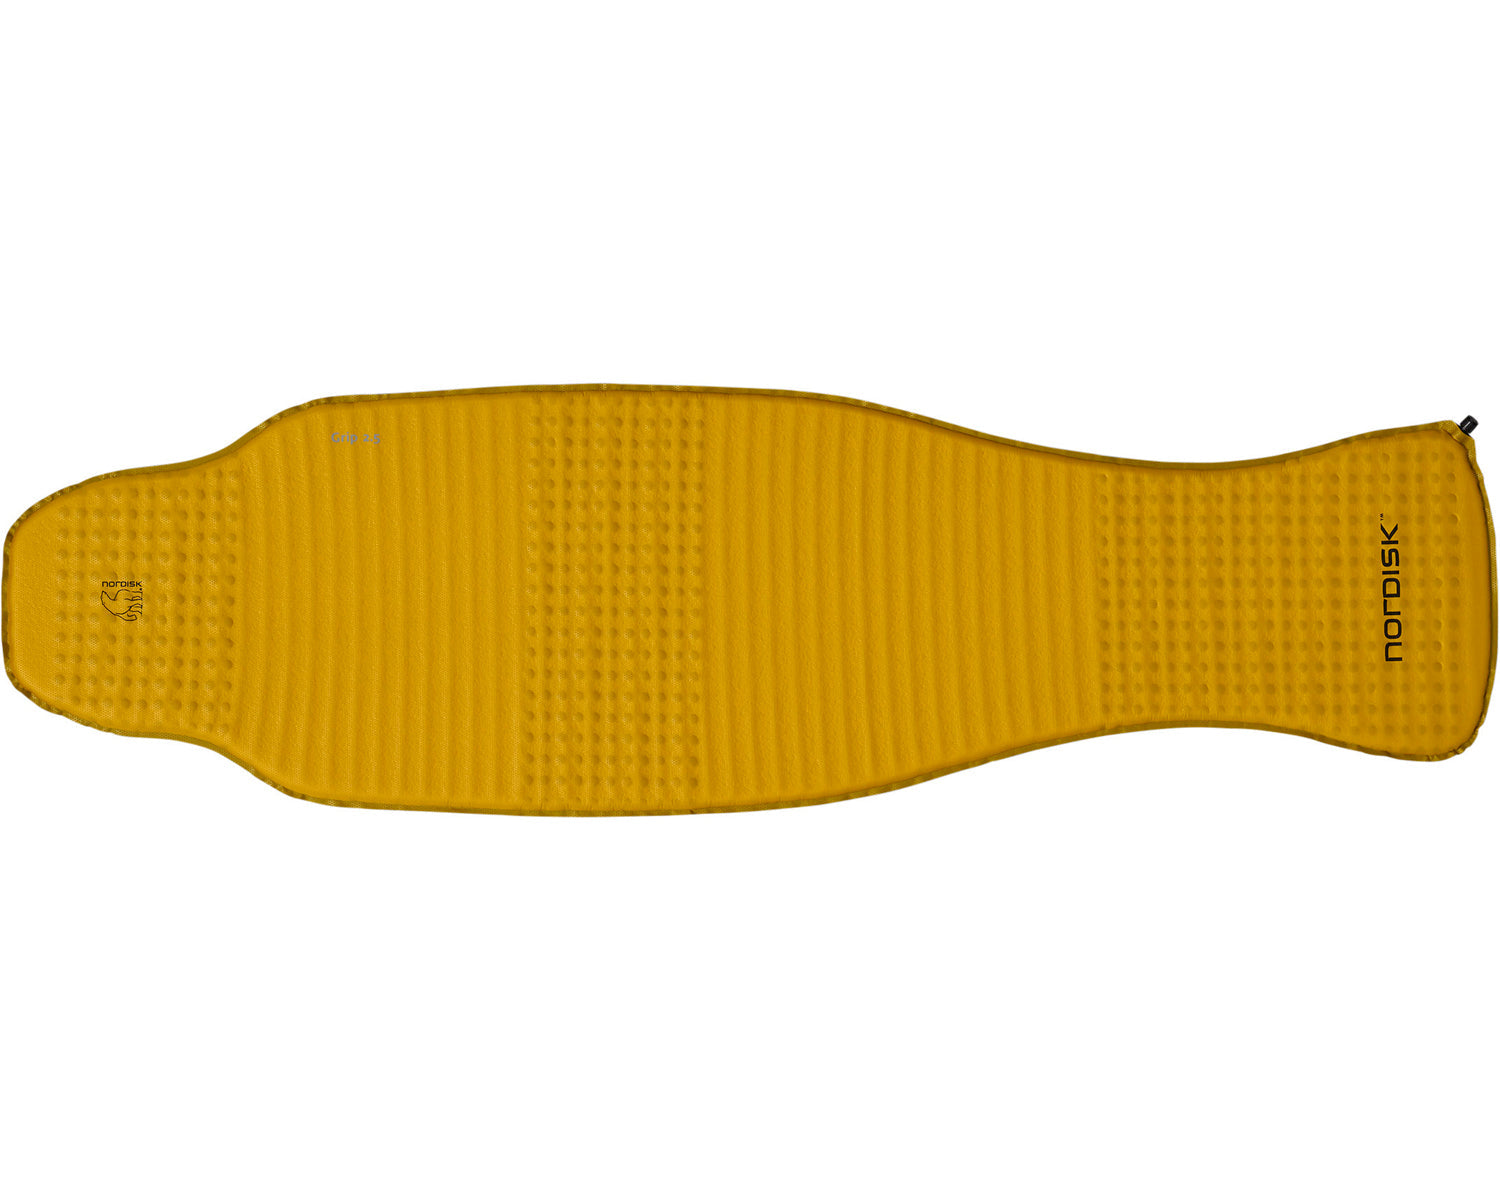 Grip 2.5 - Mustard Yellow